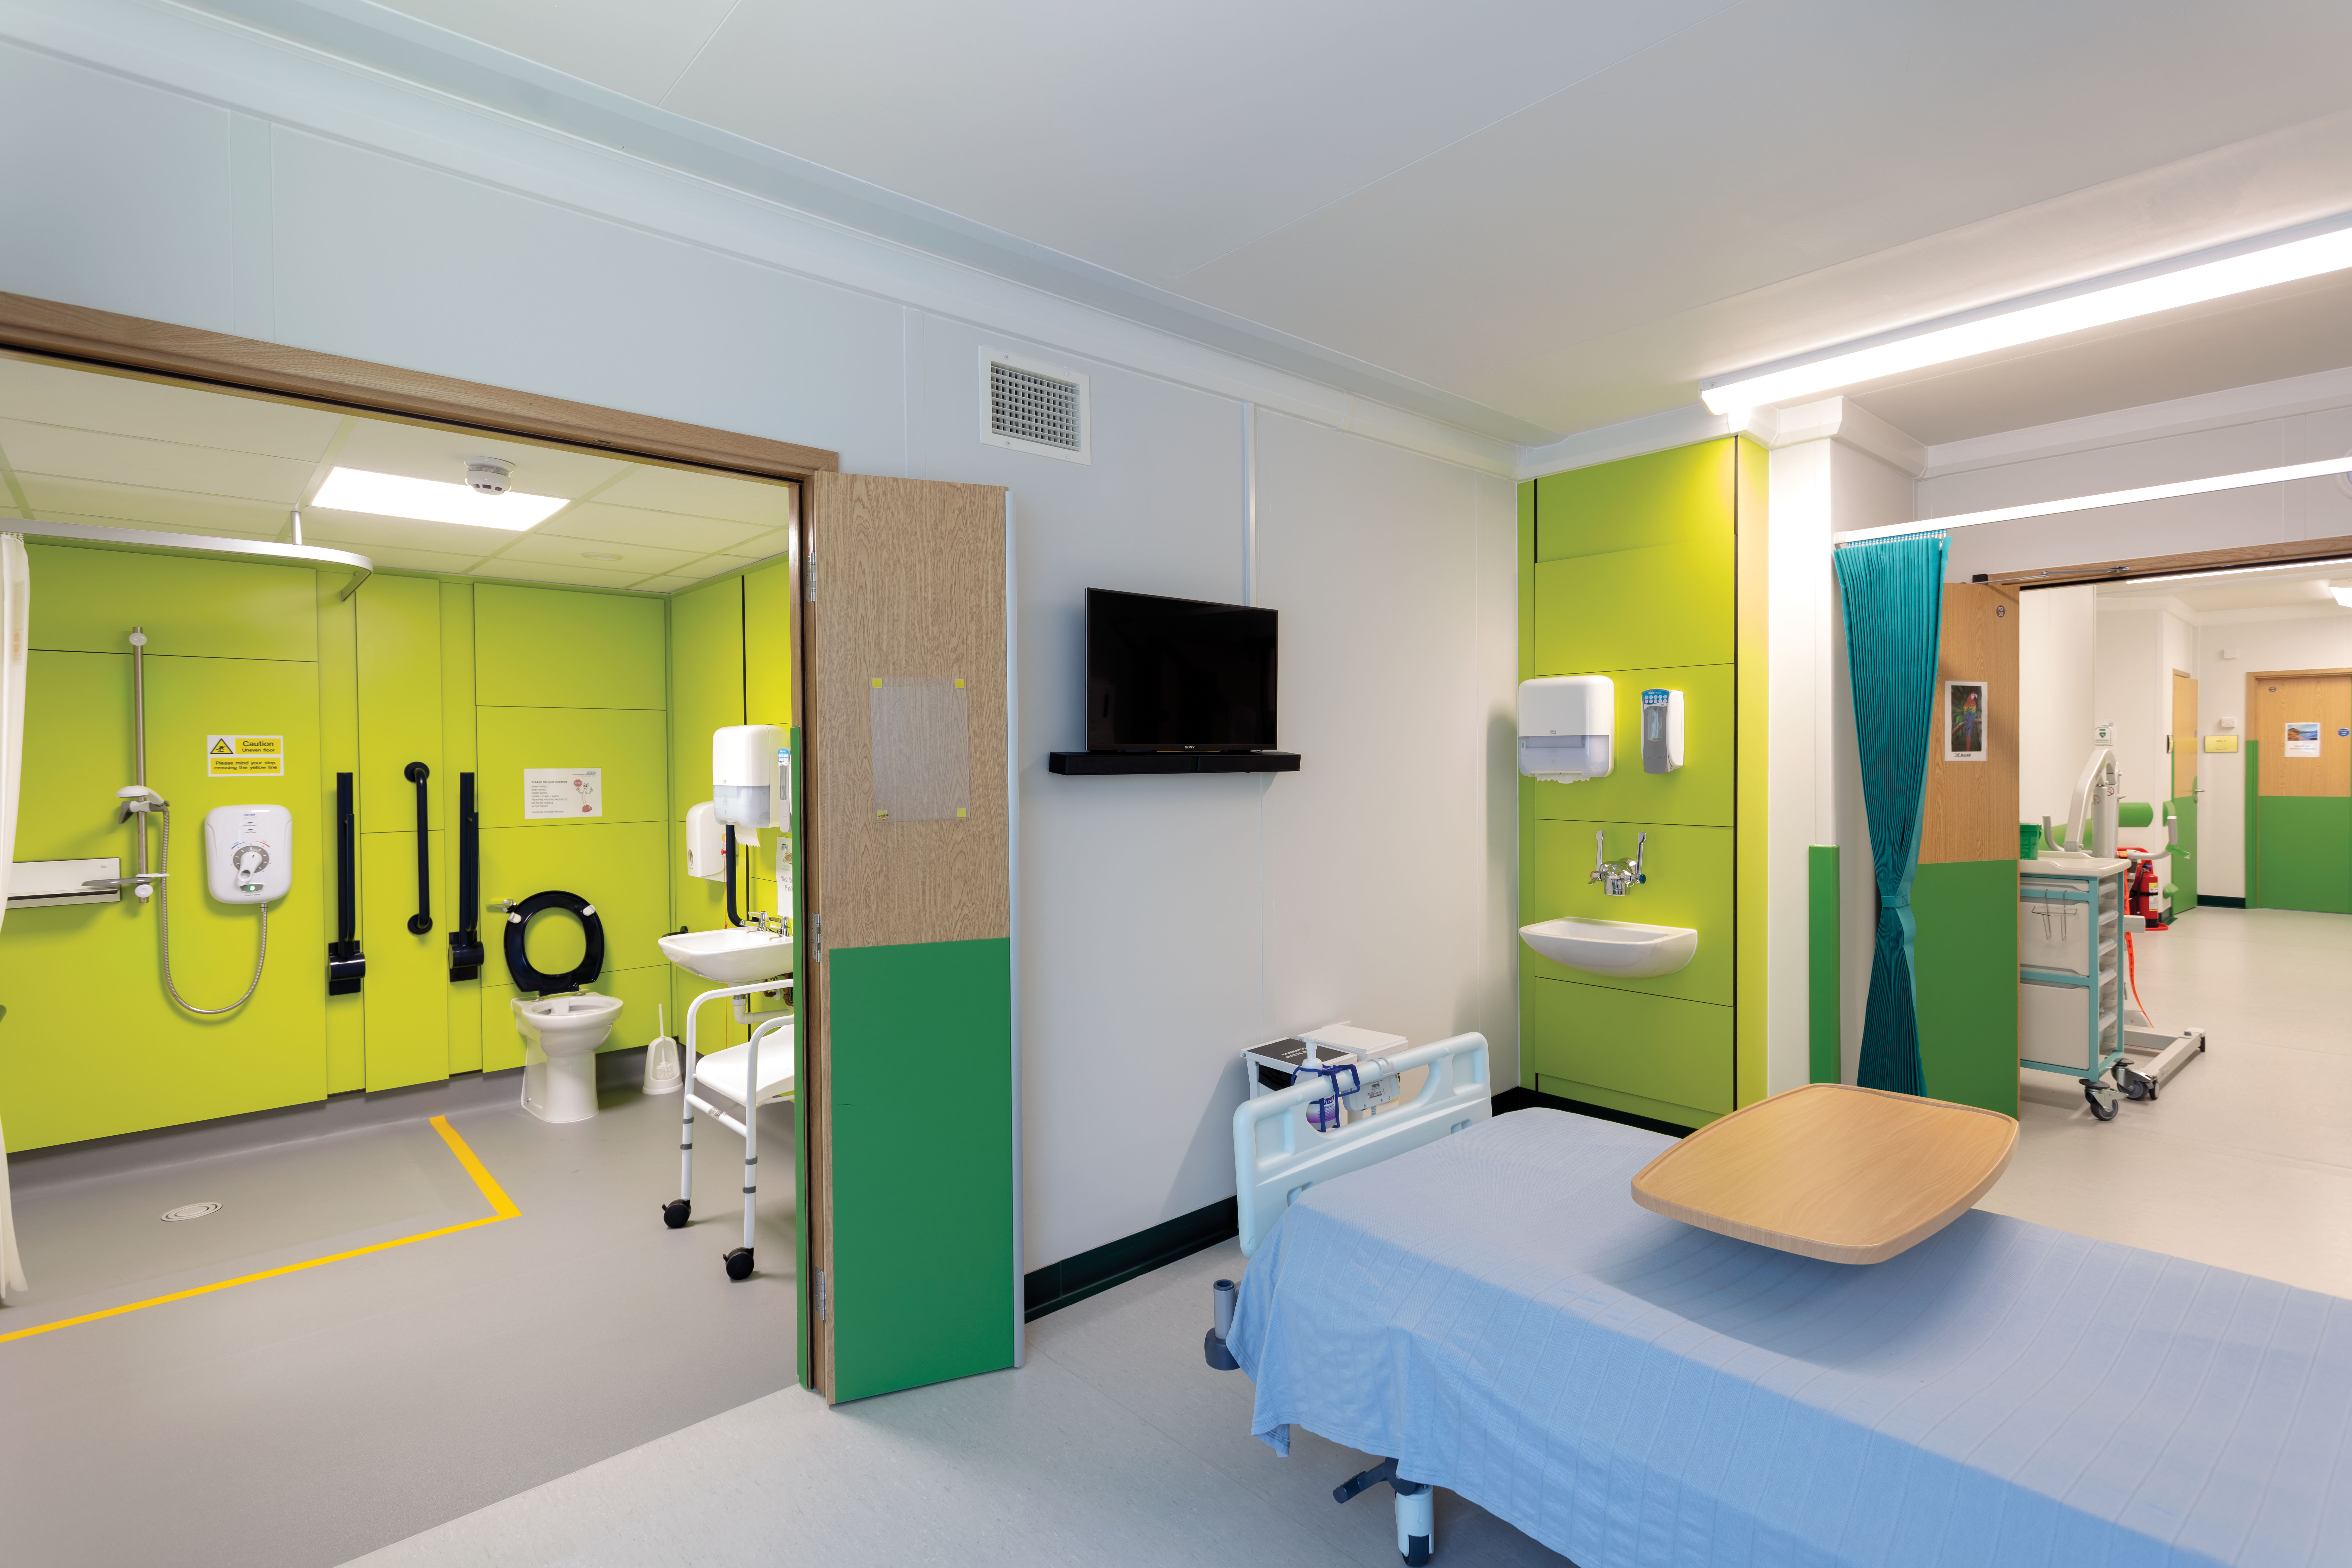 Portakabin solution eases pressure on hospital services